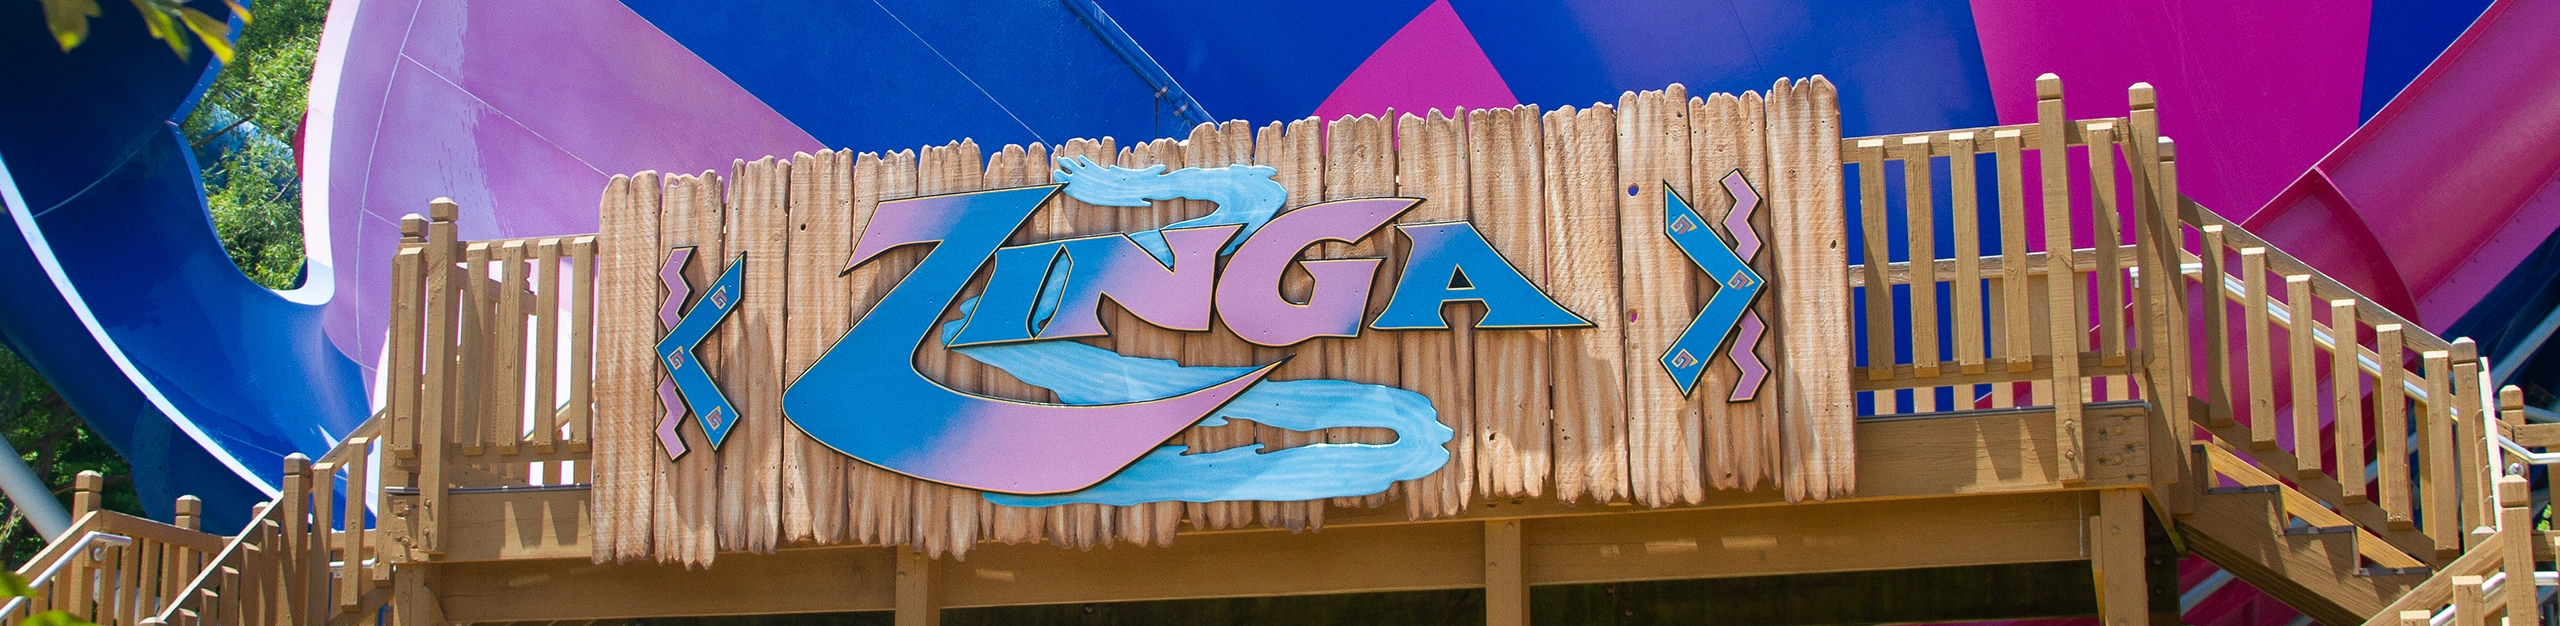 Zinga at Holiday World & Splashin' Safari in Santa Claus, Indiana.